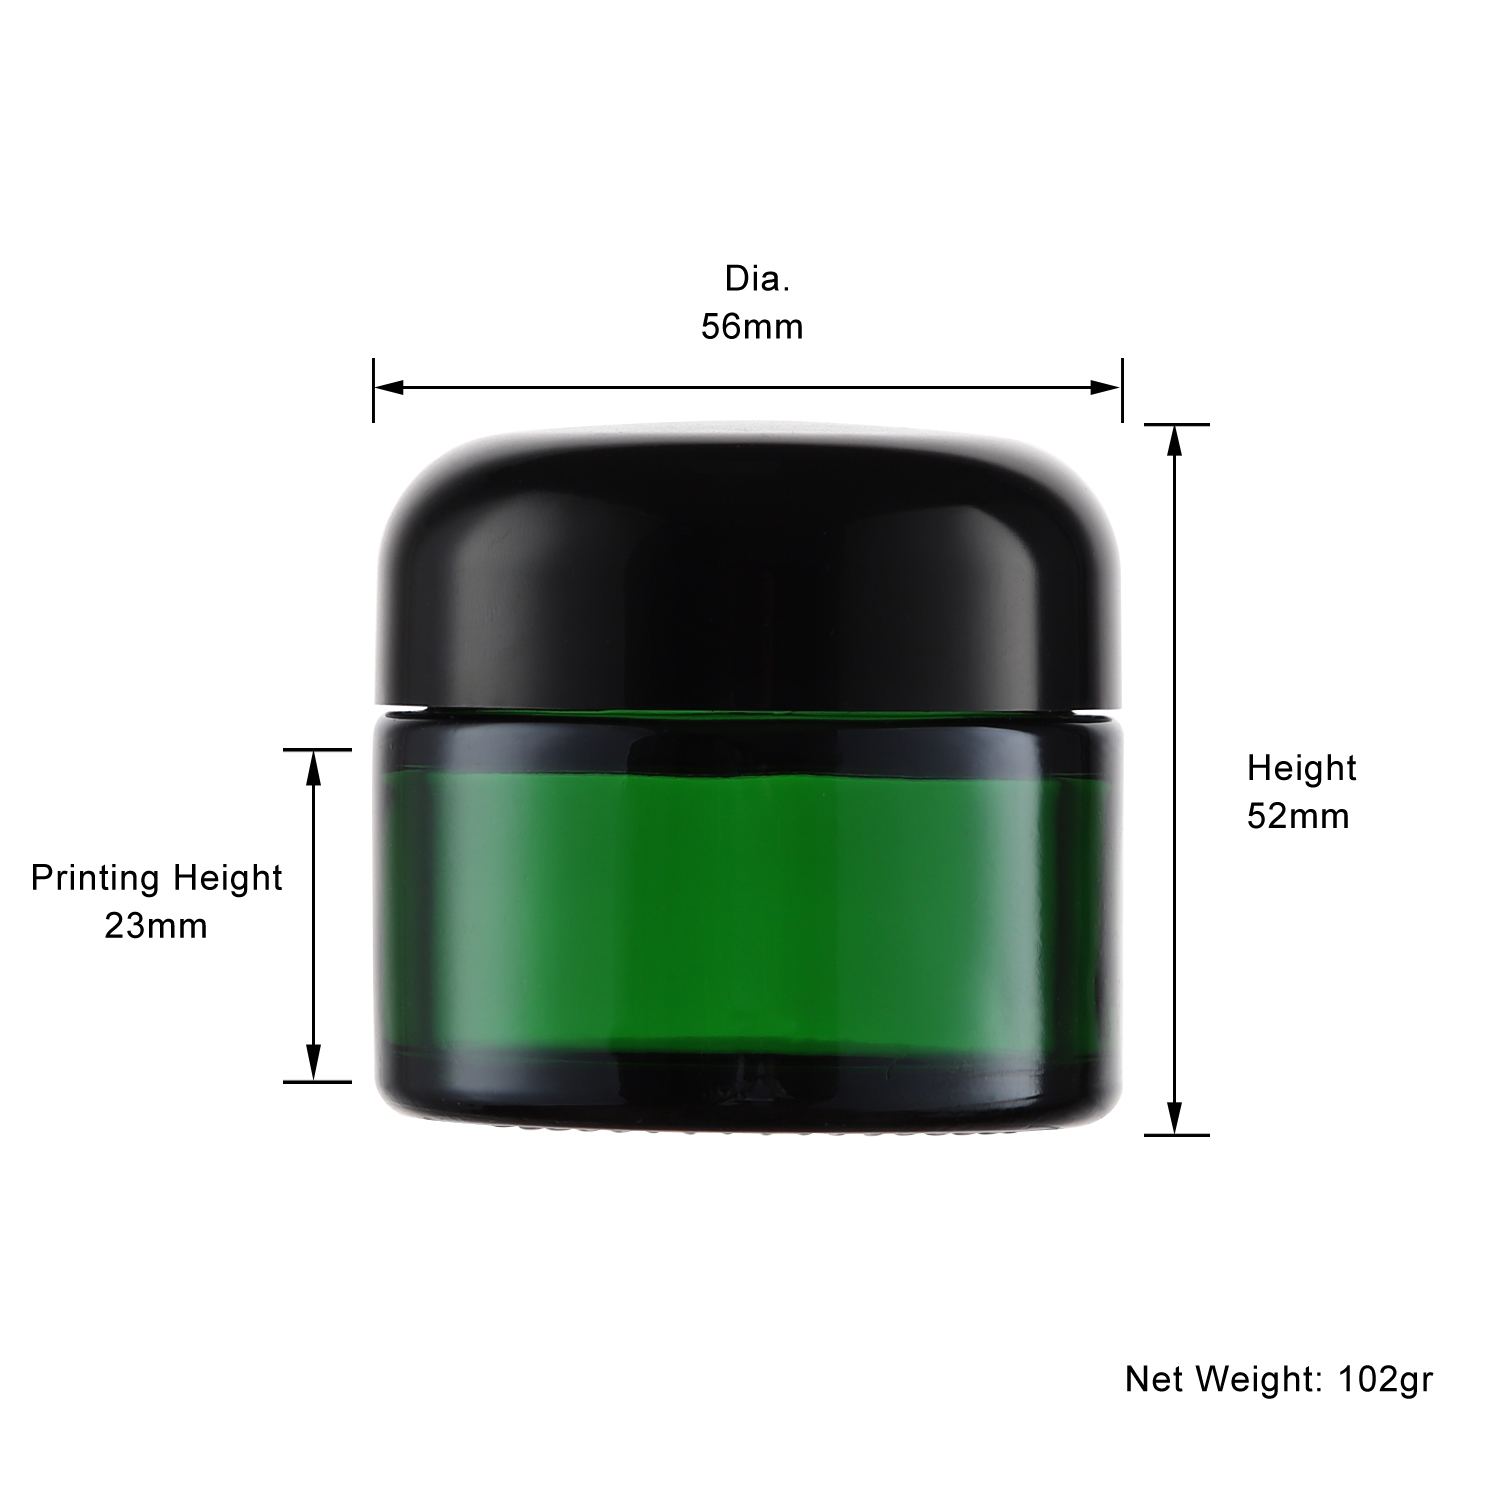 50ml green glass jar